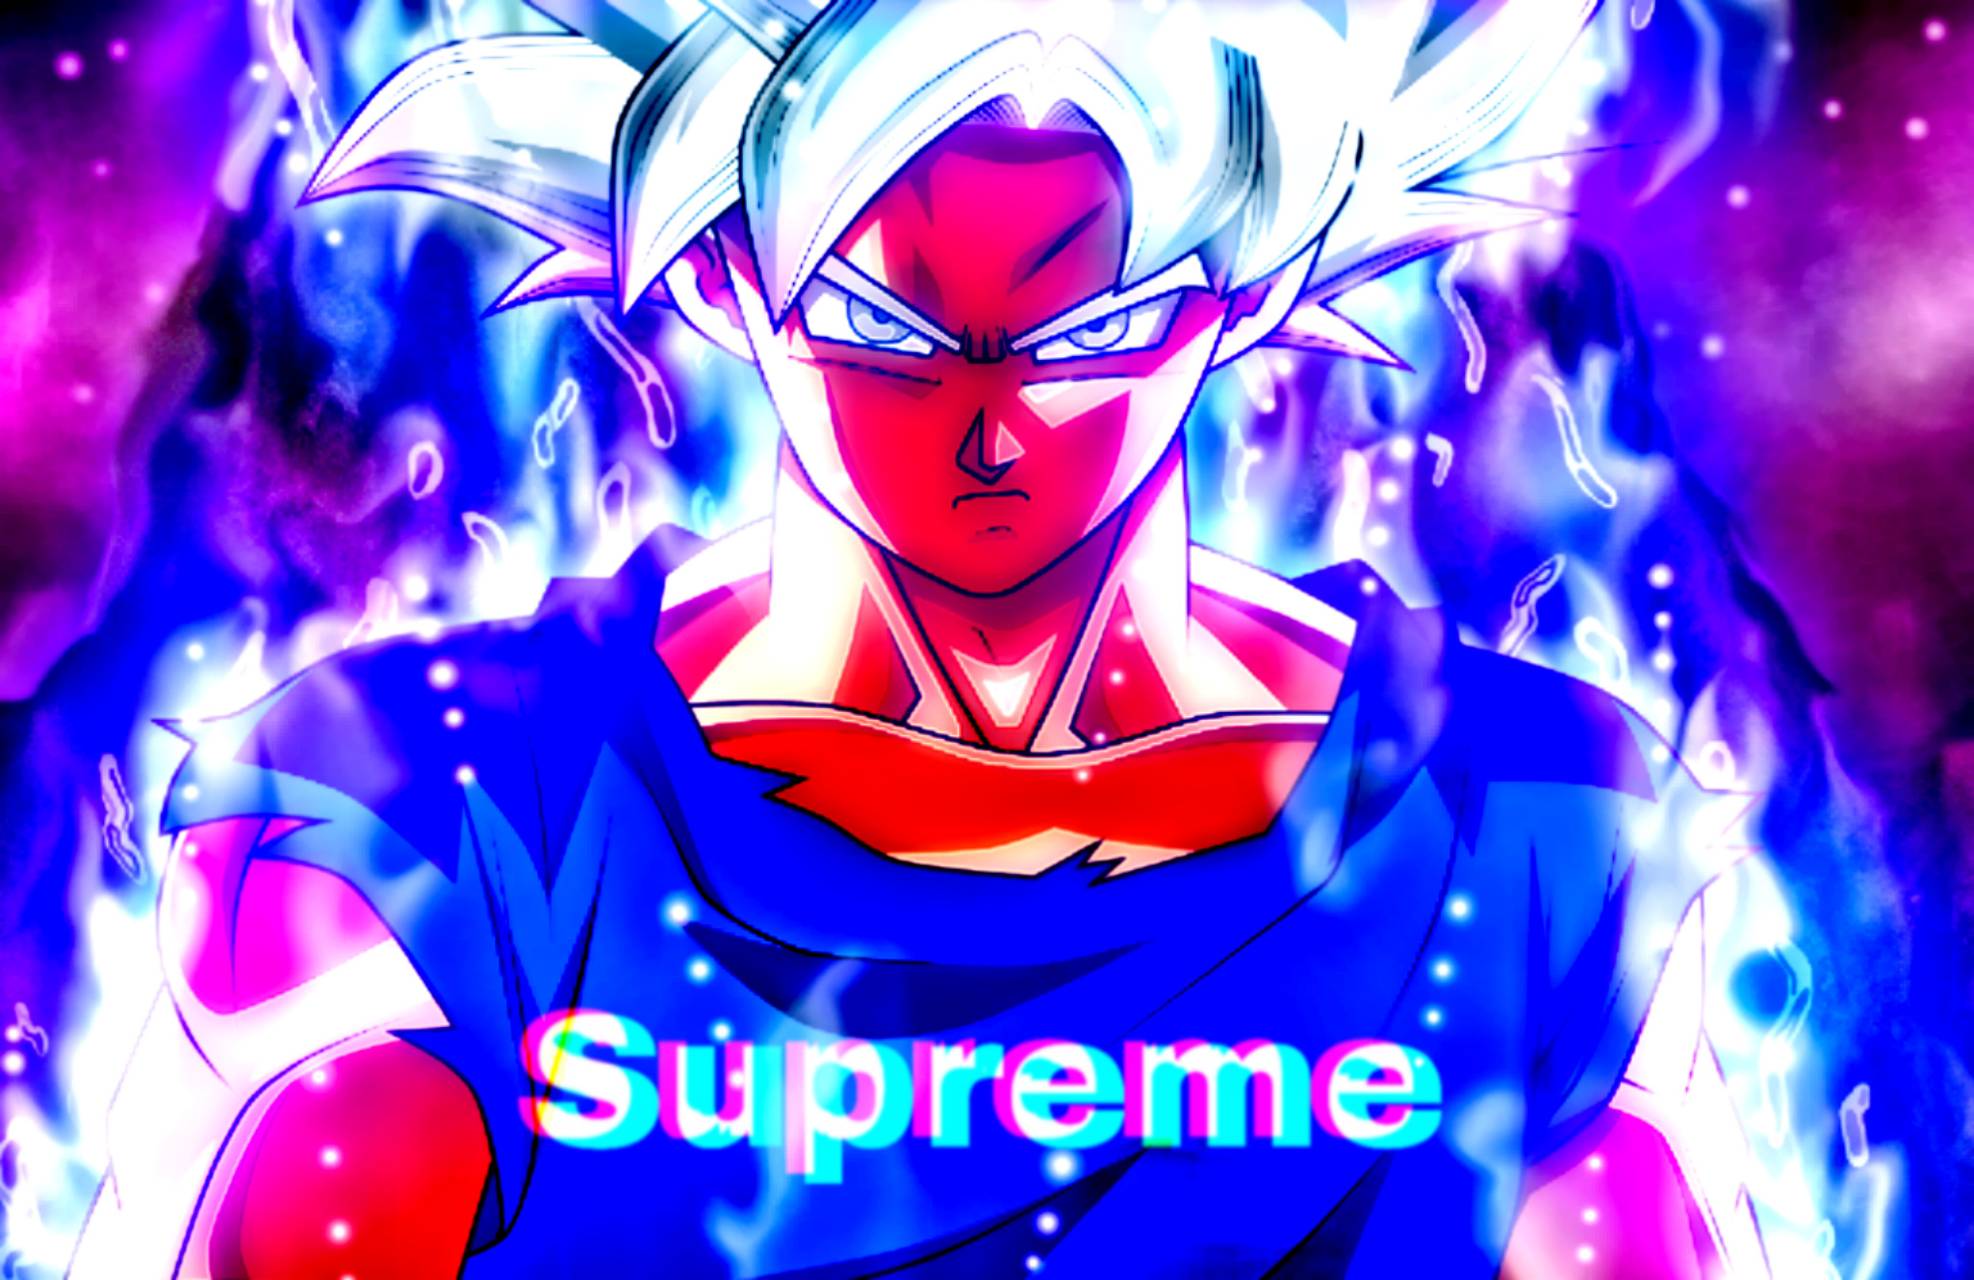 Goku Supreme Wallpapers Top Free Goku Supreme Backgrounds - Reverasite